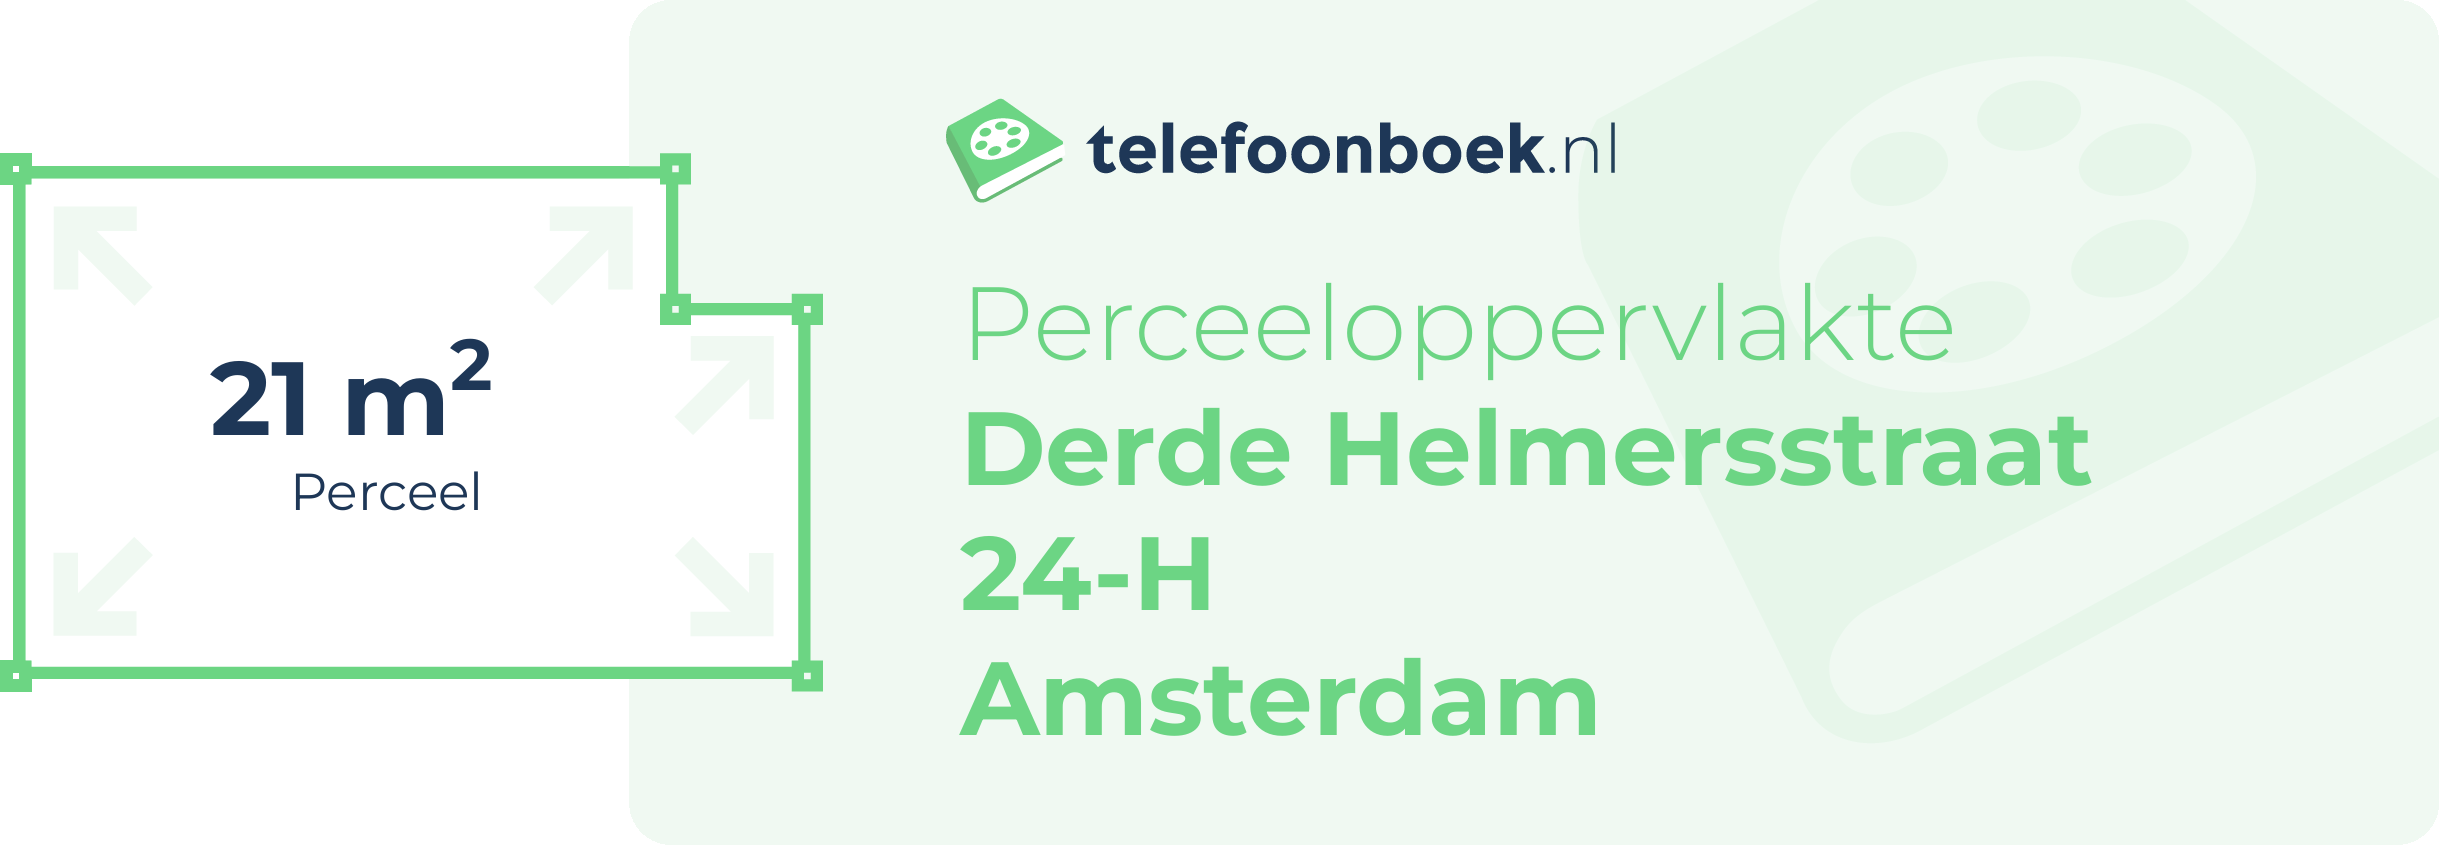 Perceeloppervlakte Derde Helmersstraat 24-H Amsterdam